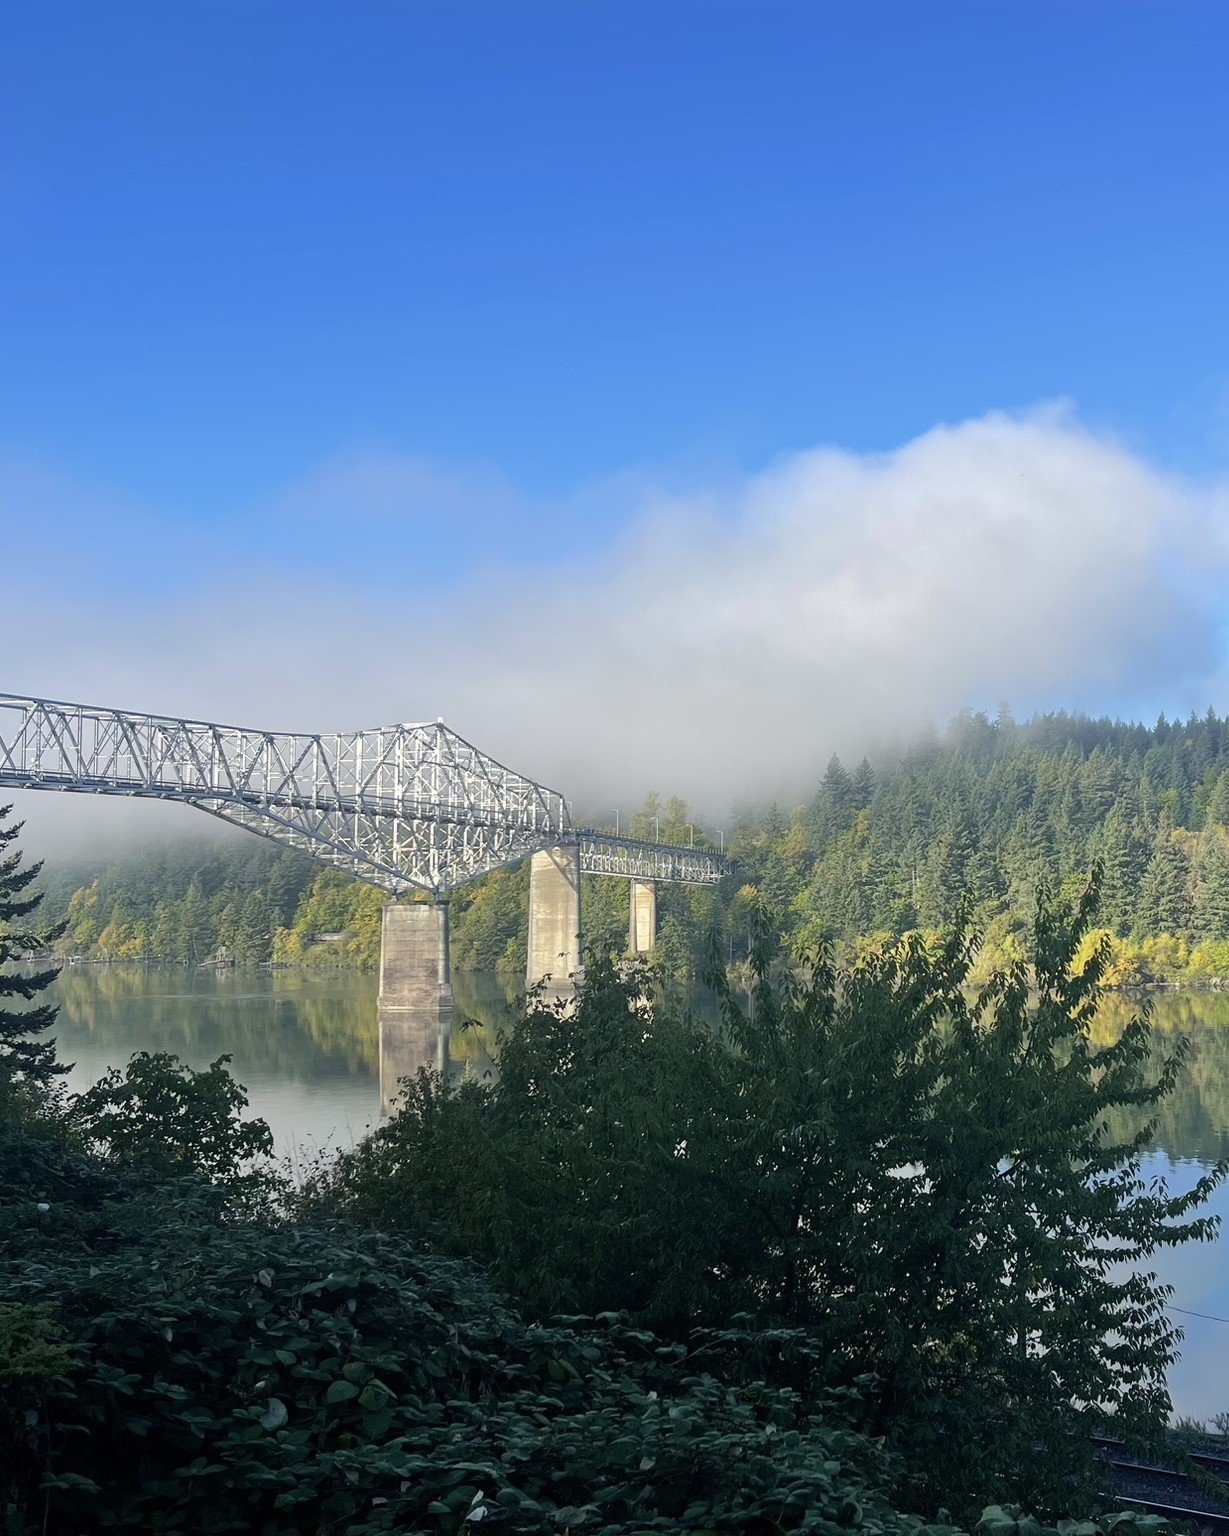  The famous Bridge of the Gods welcomes travelers between Oregon and Washington. 